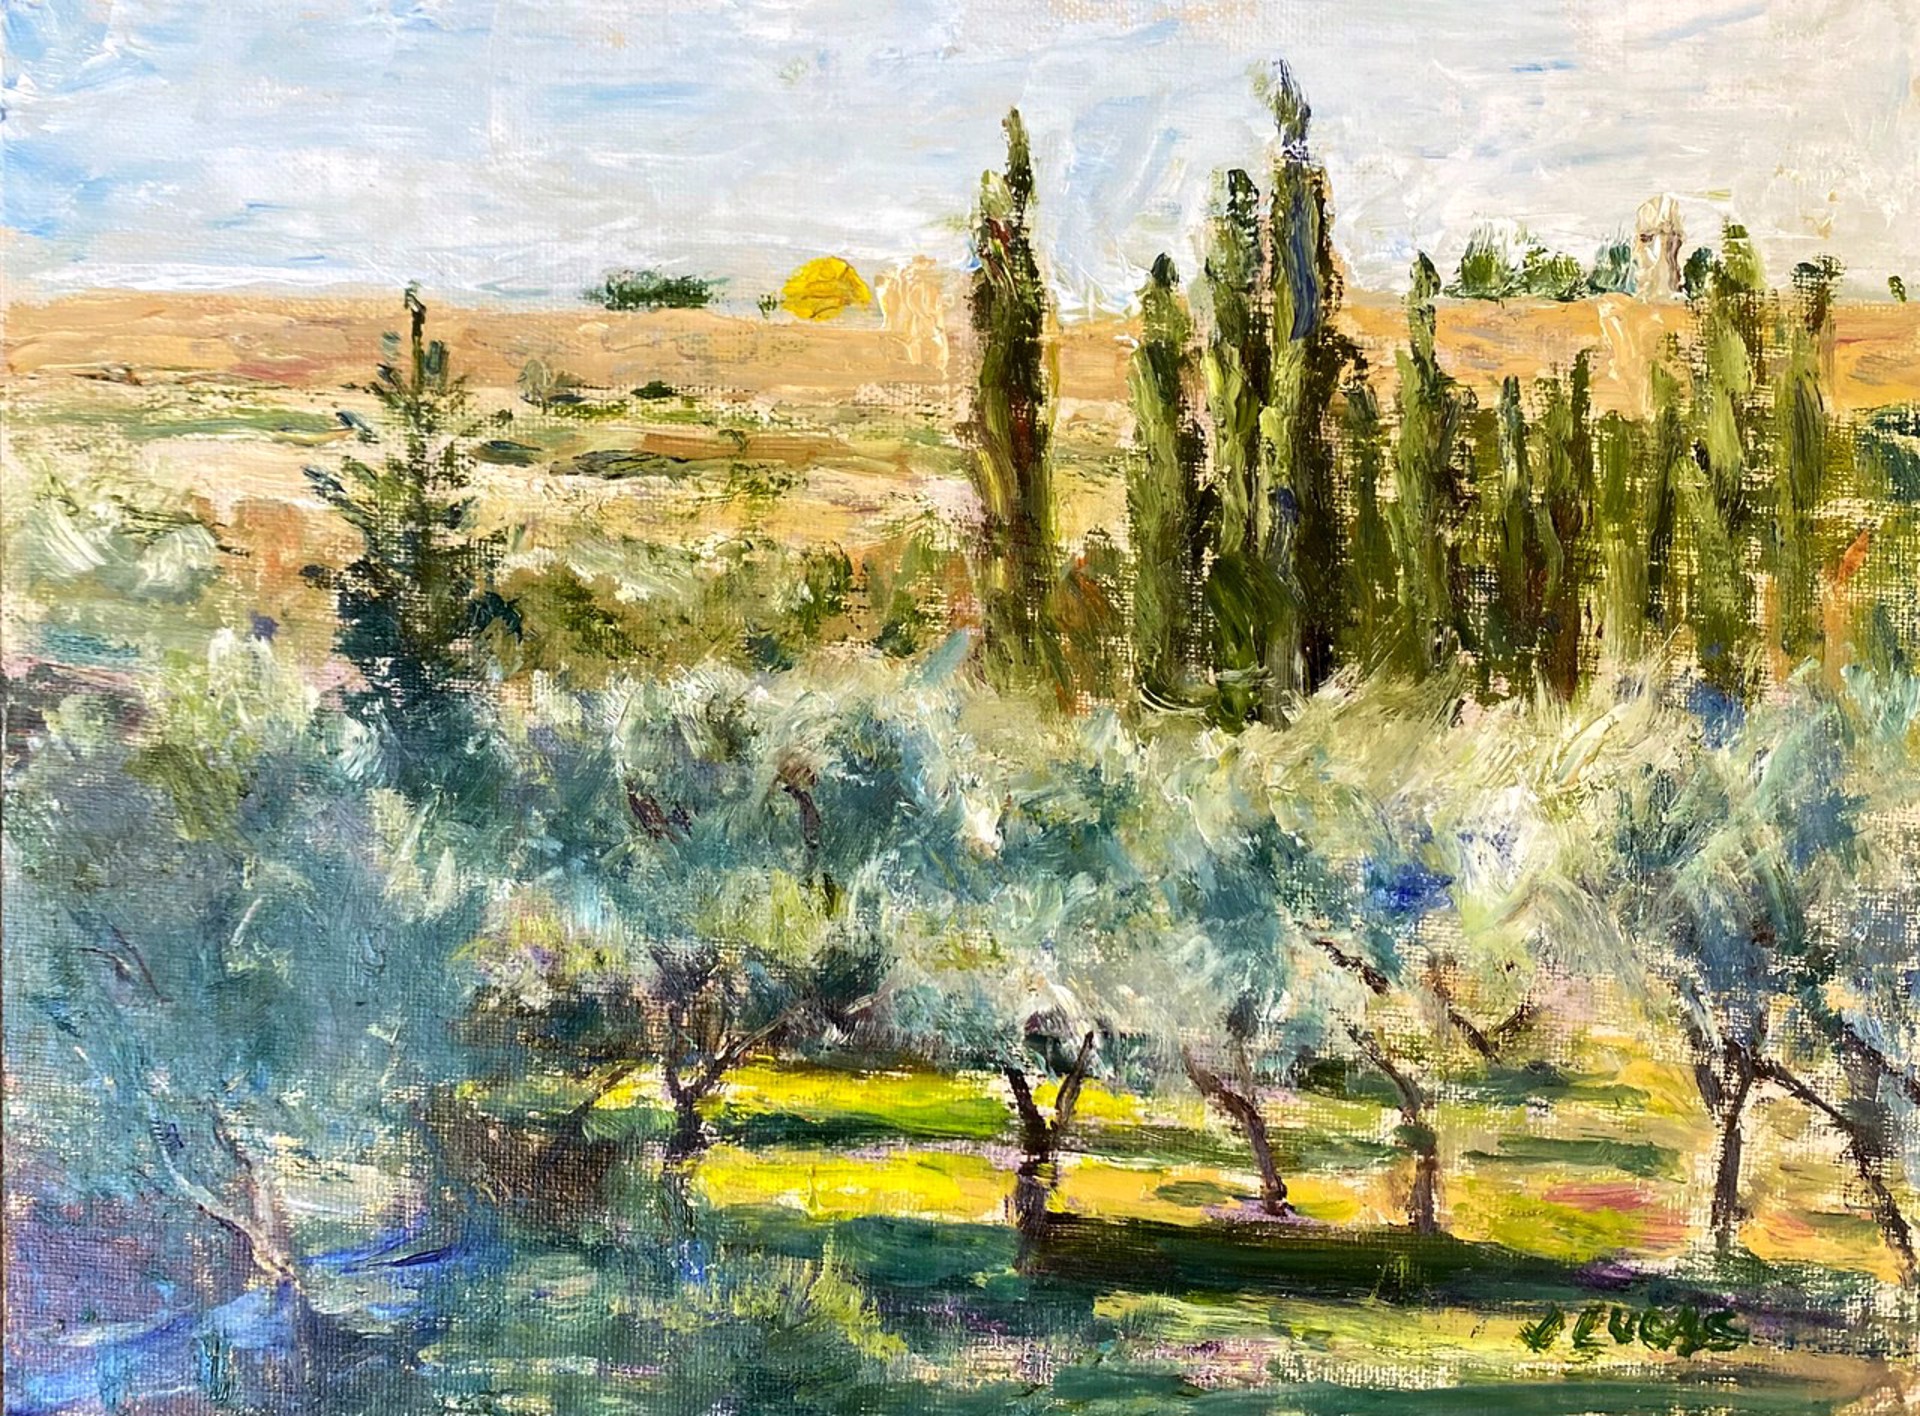 Gethsemane Olive Trees by Janet Lucas Beck